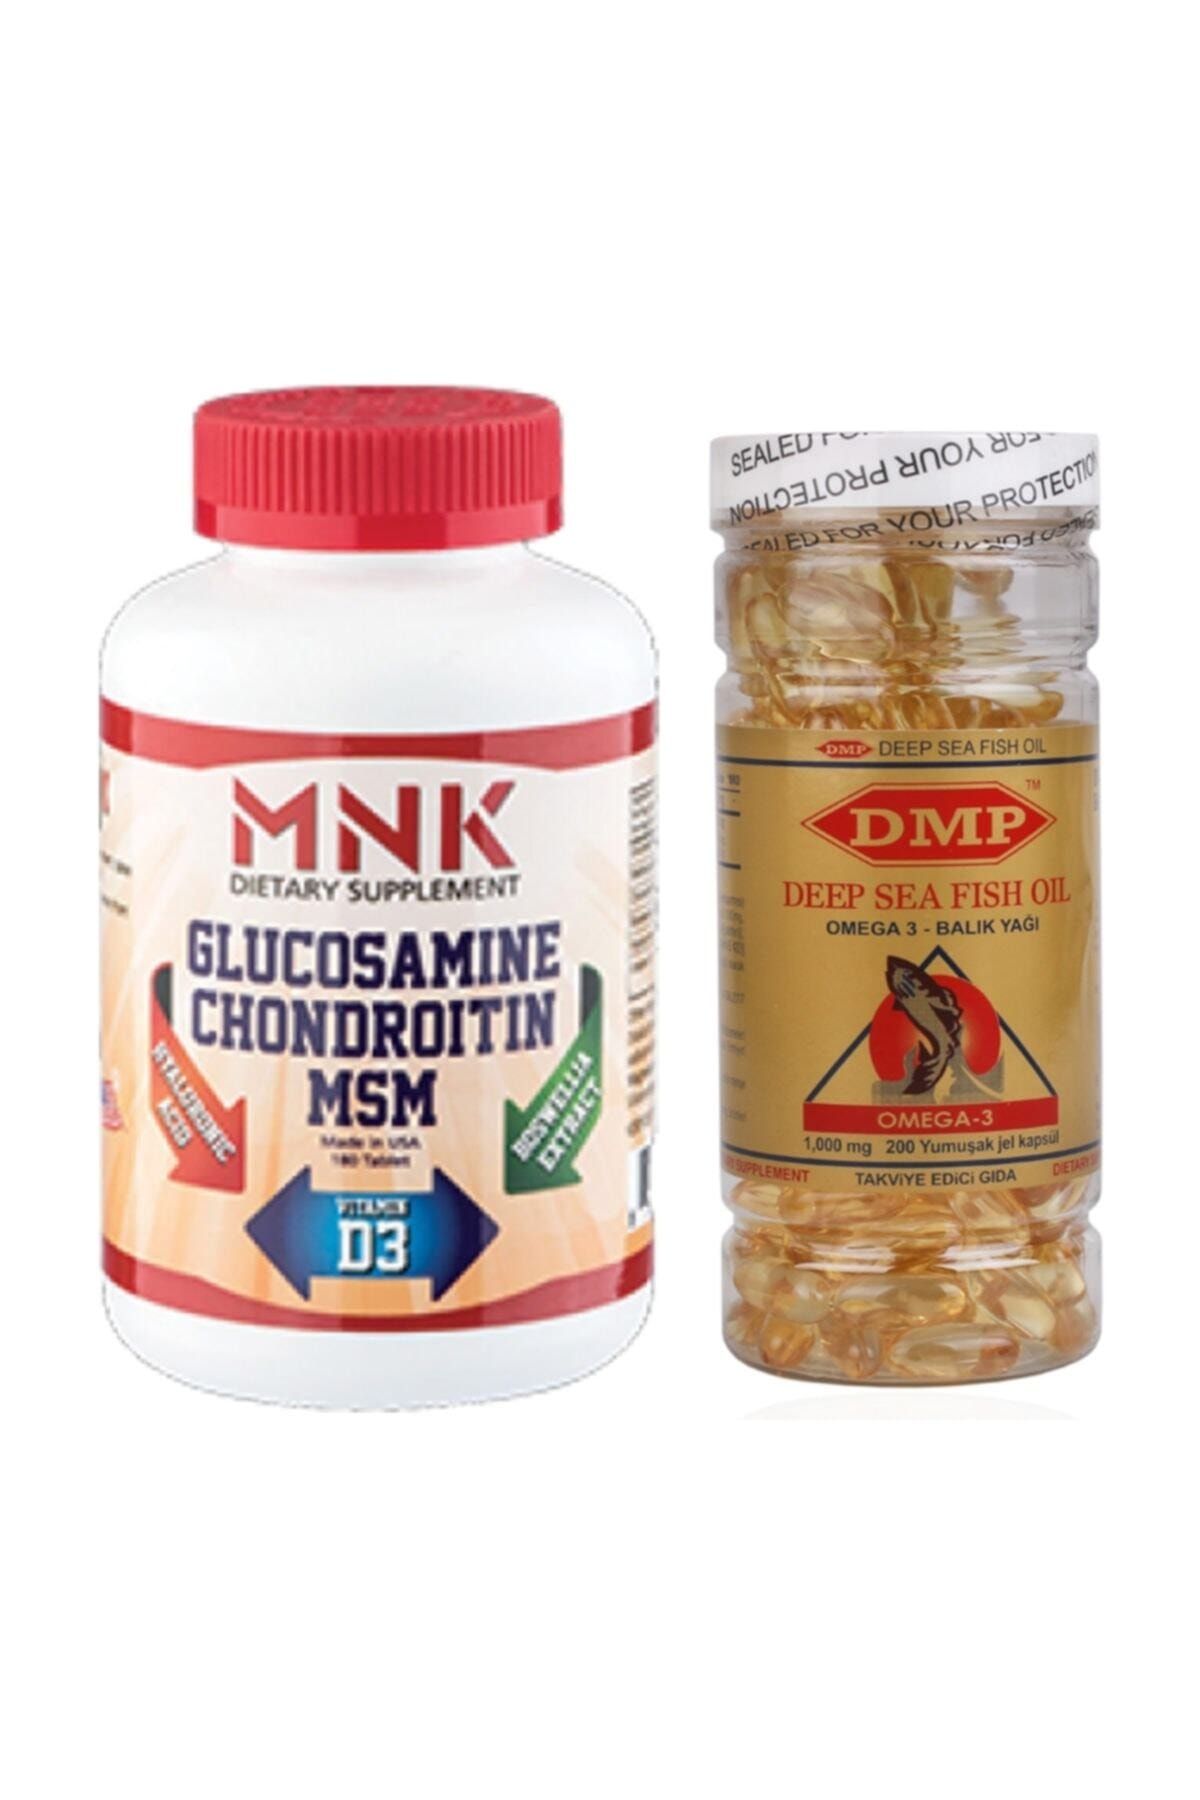 Mnk Glucosamine Chondroitin Msm 180 Tablet Omega 3 200 Capsül